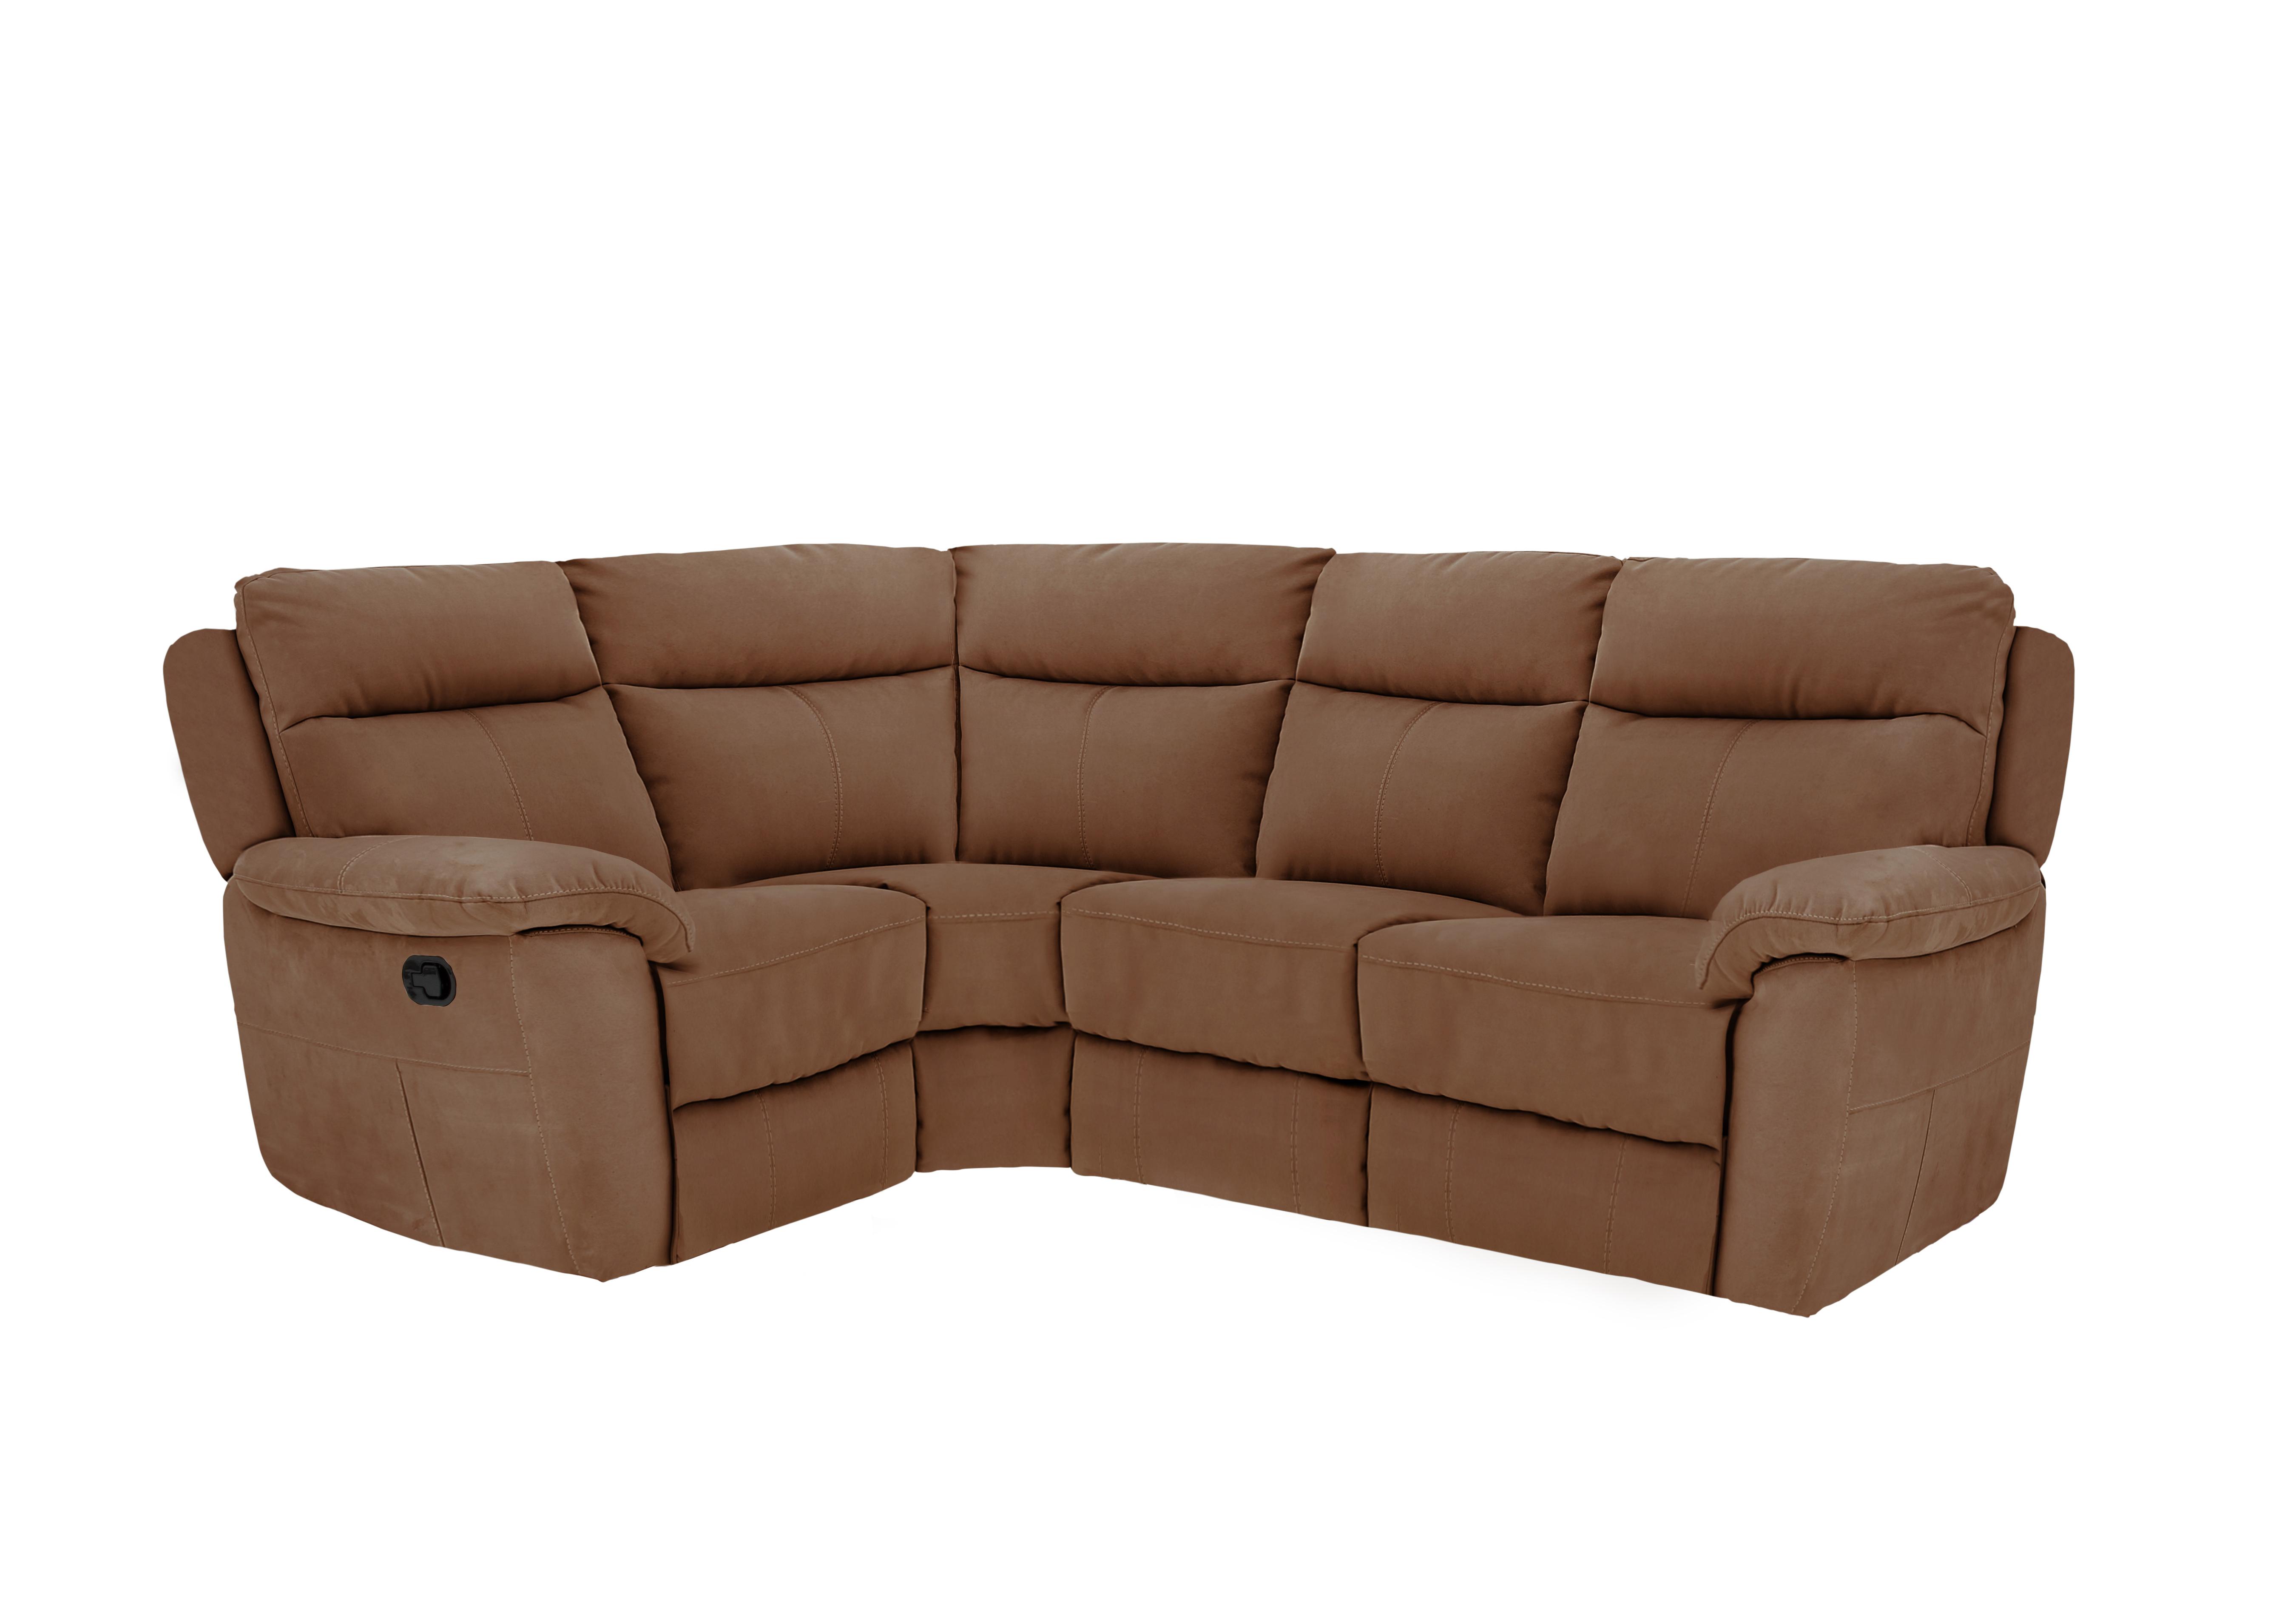 Snug Compact Fabric Corner Sofa in Bfa-Blj-R05 Hazelnut on Furniture Village